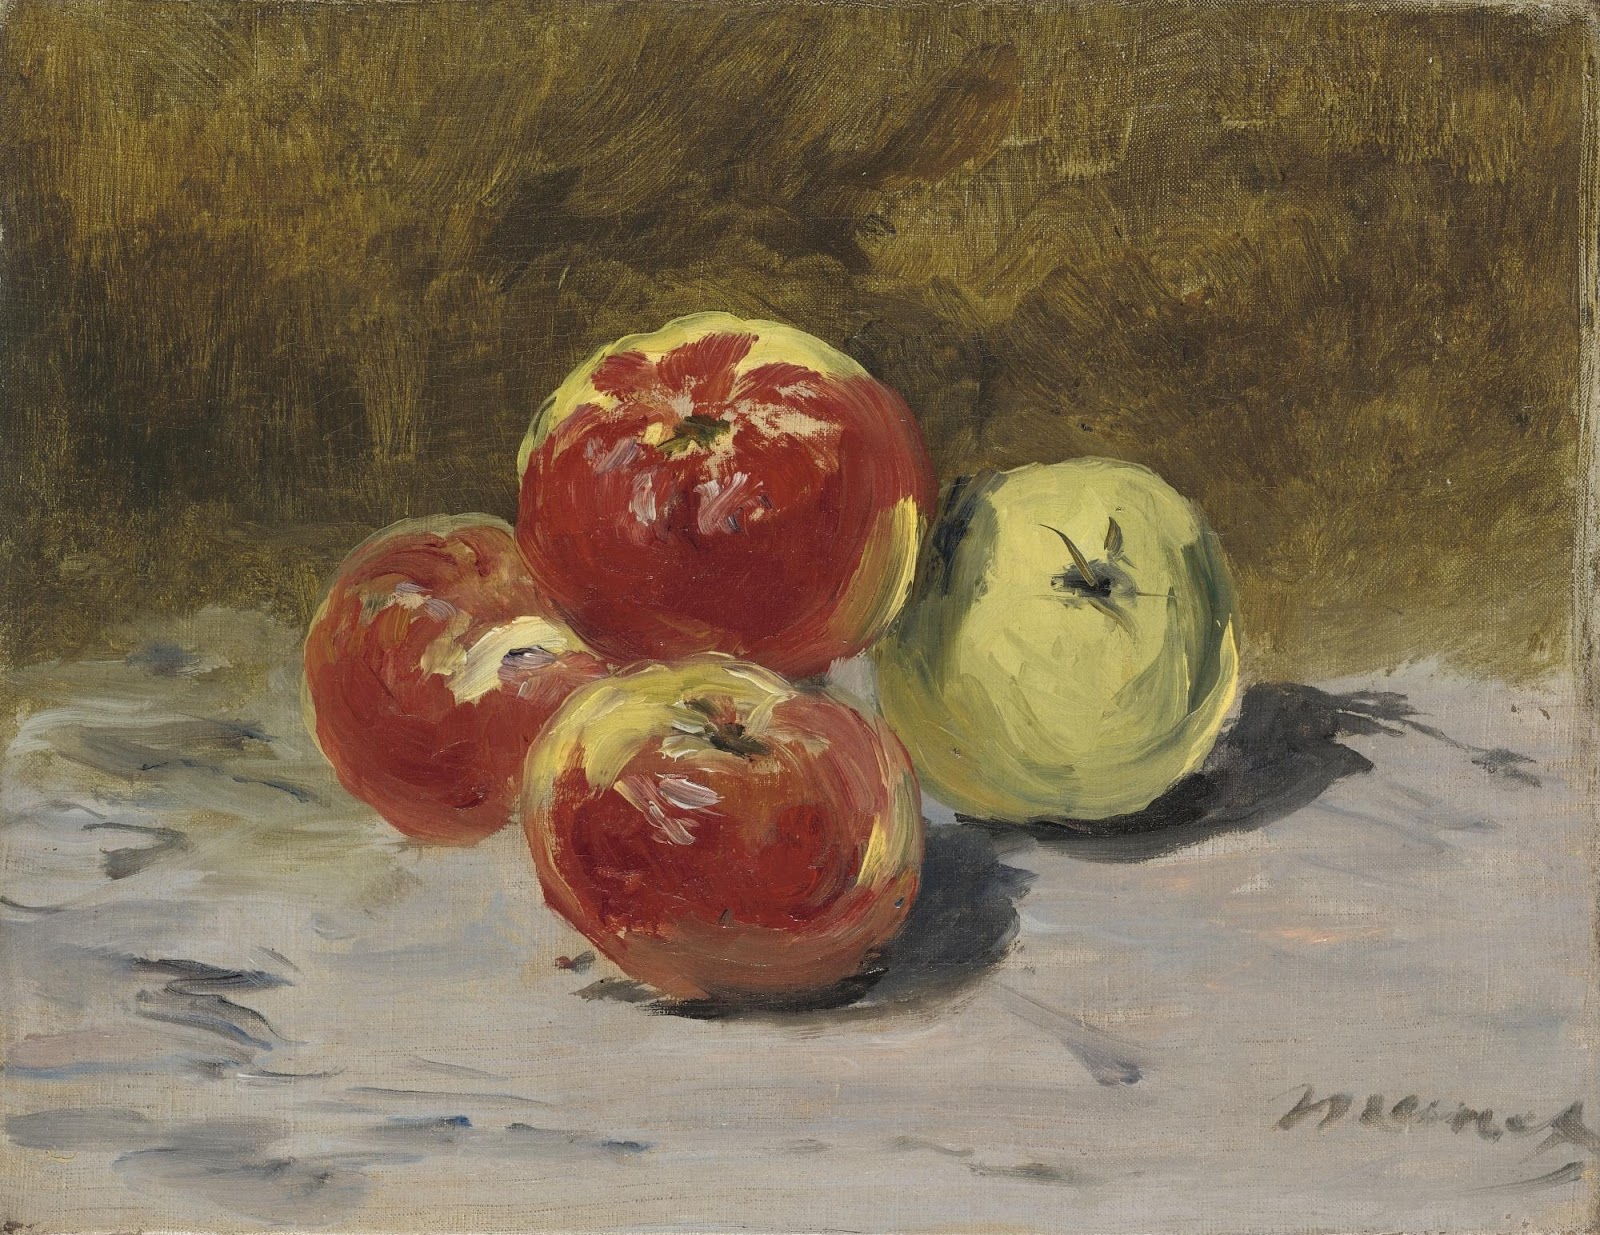 Edouard+Manet-1832-1883 (134).jpg